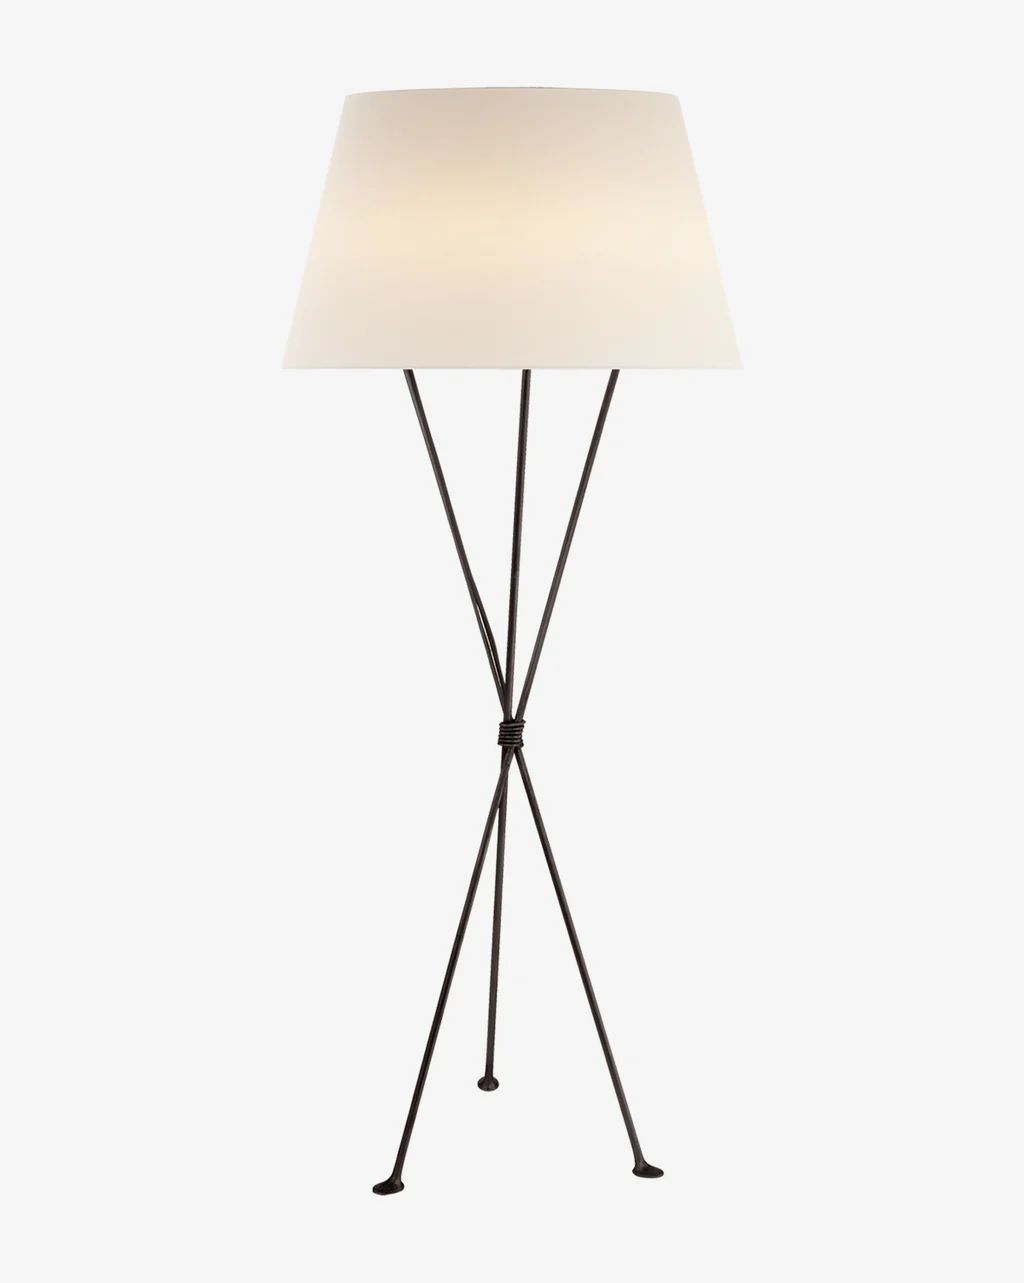 Lebon Floor Lamp | McGee & Co.